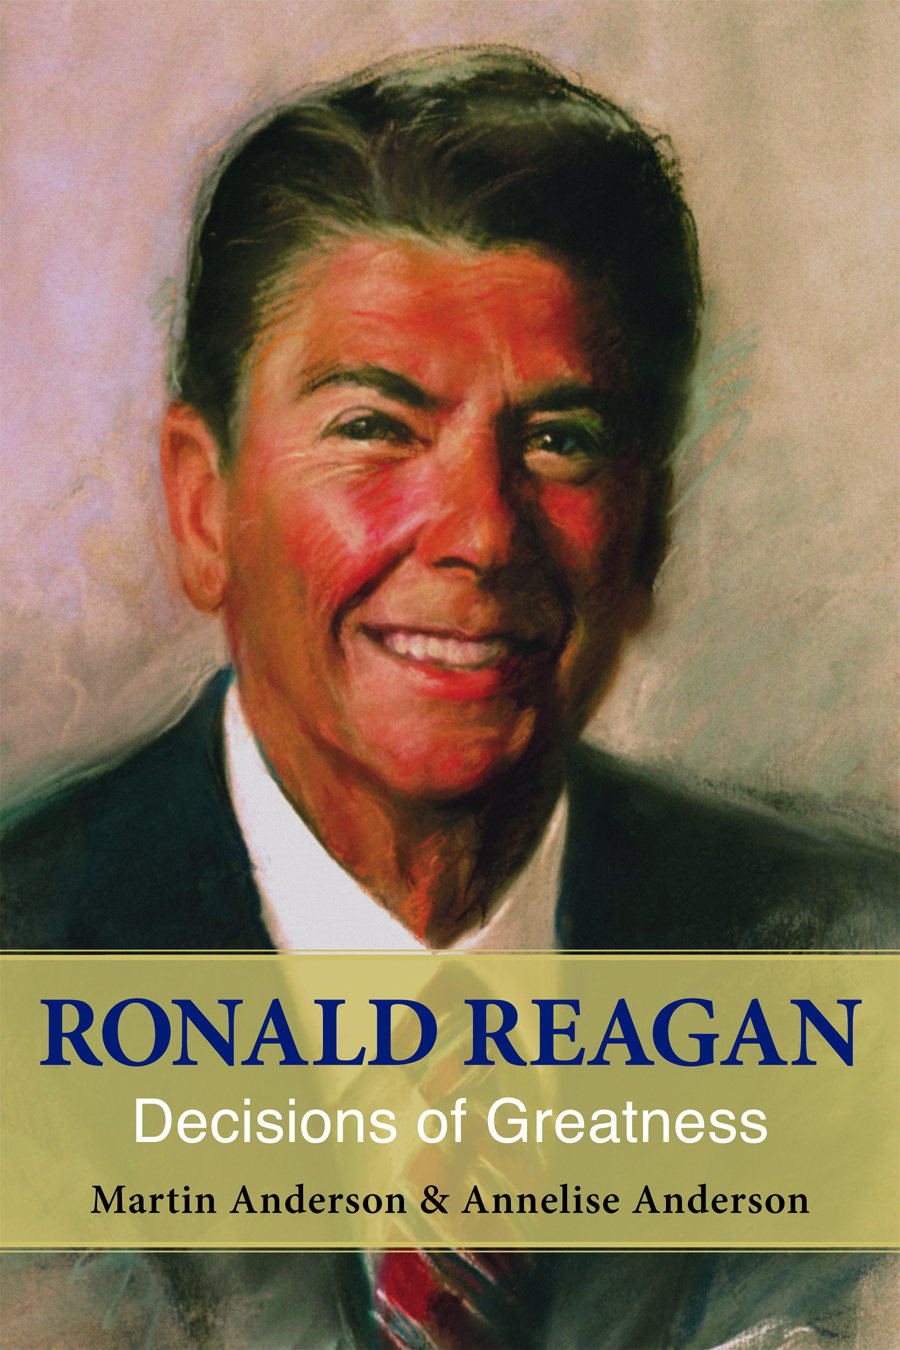 Biography of ronald reagan essay